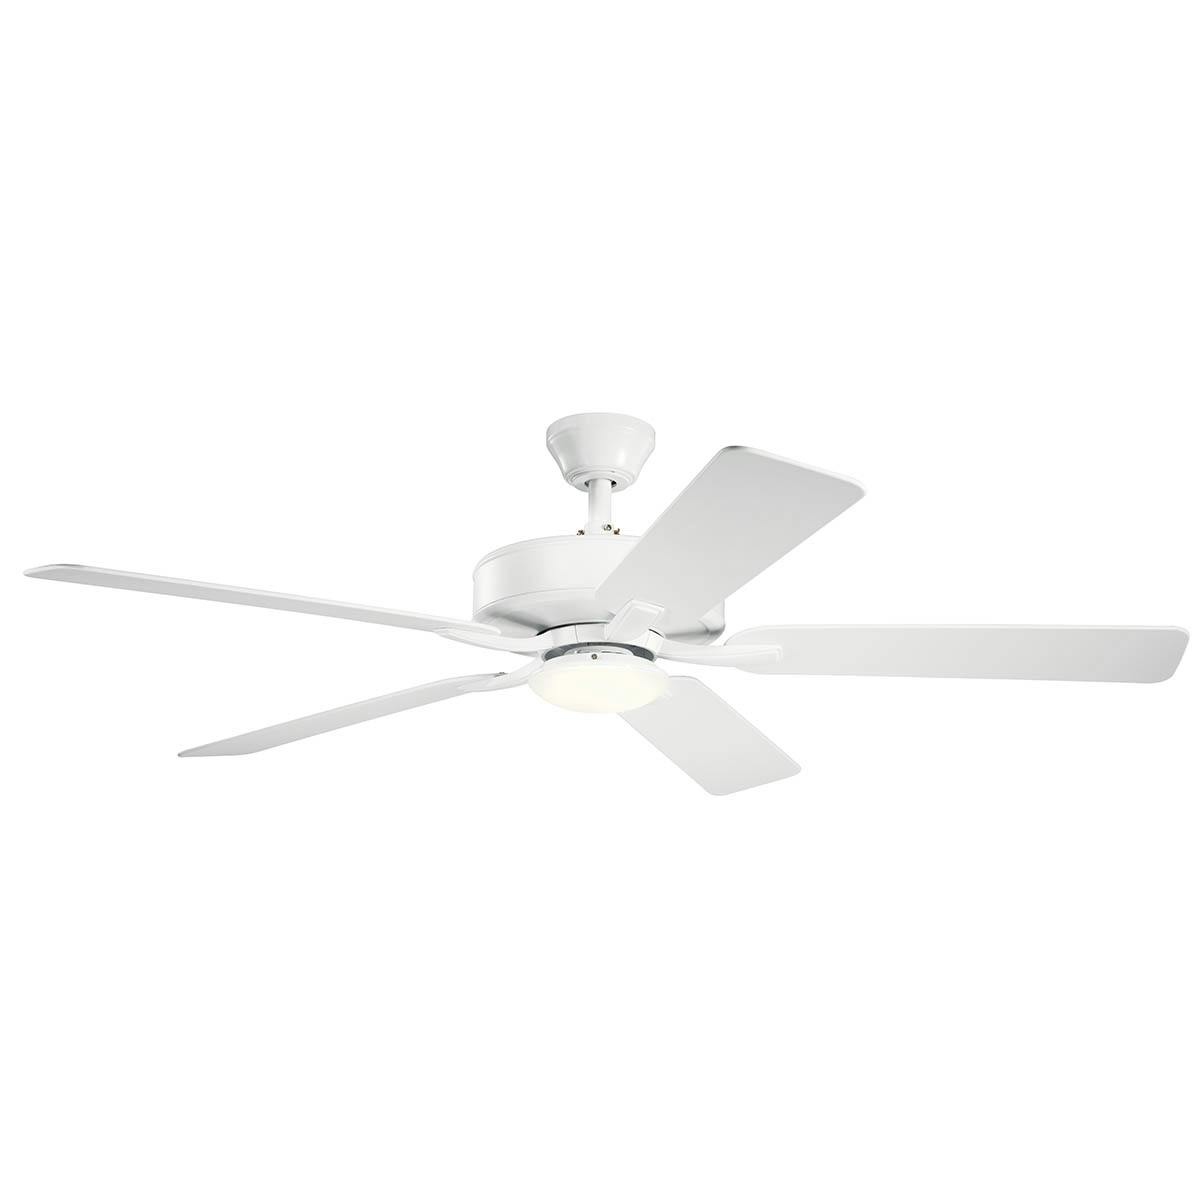 52" Basics Pro Designer LED Fan White on a white background